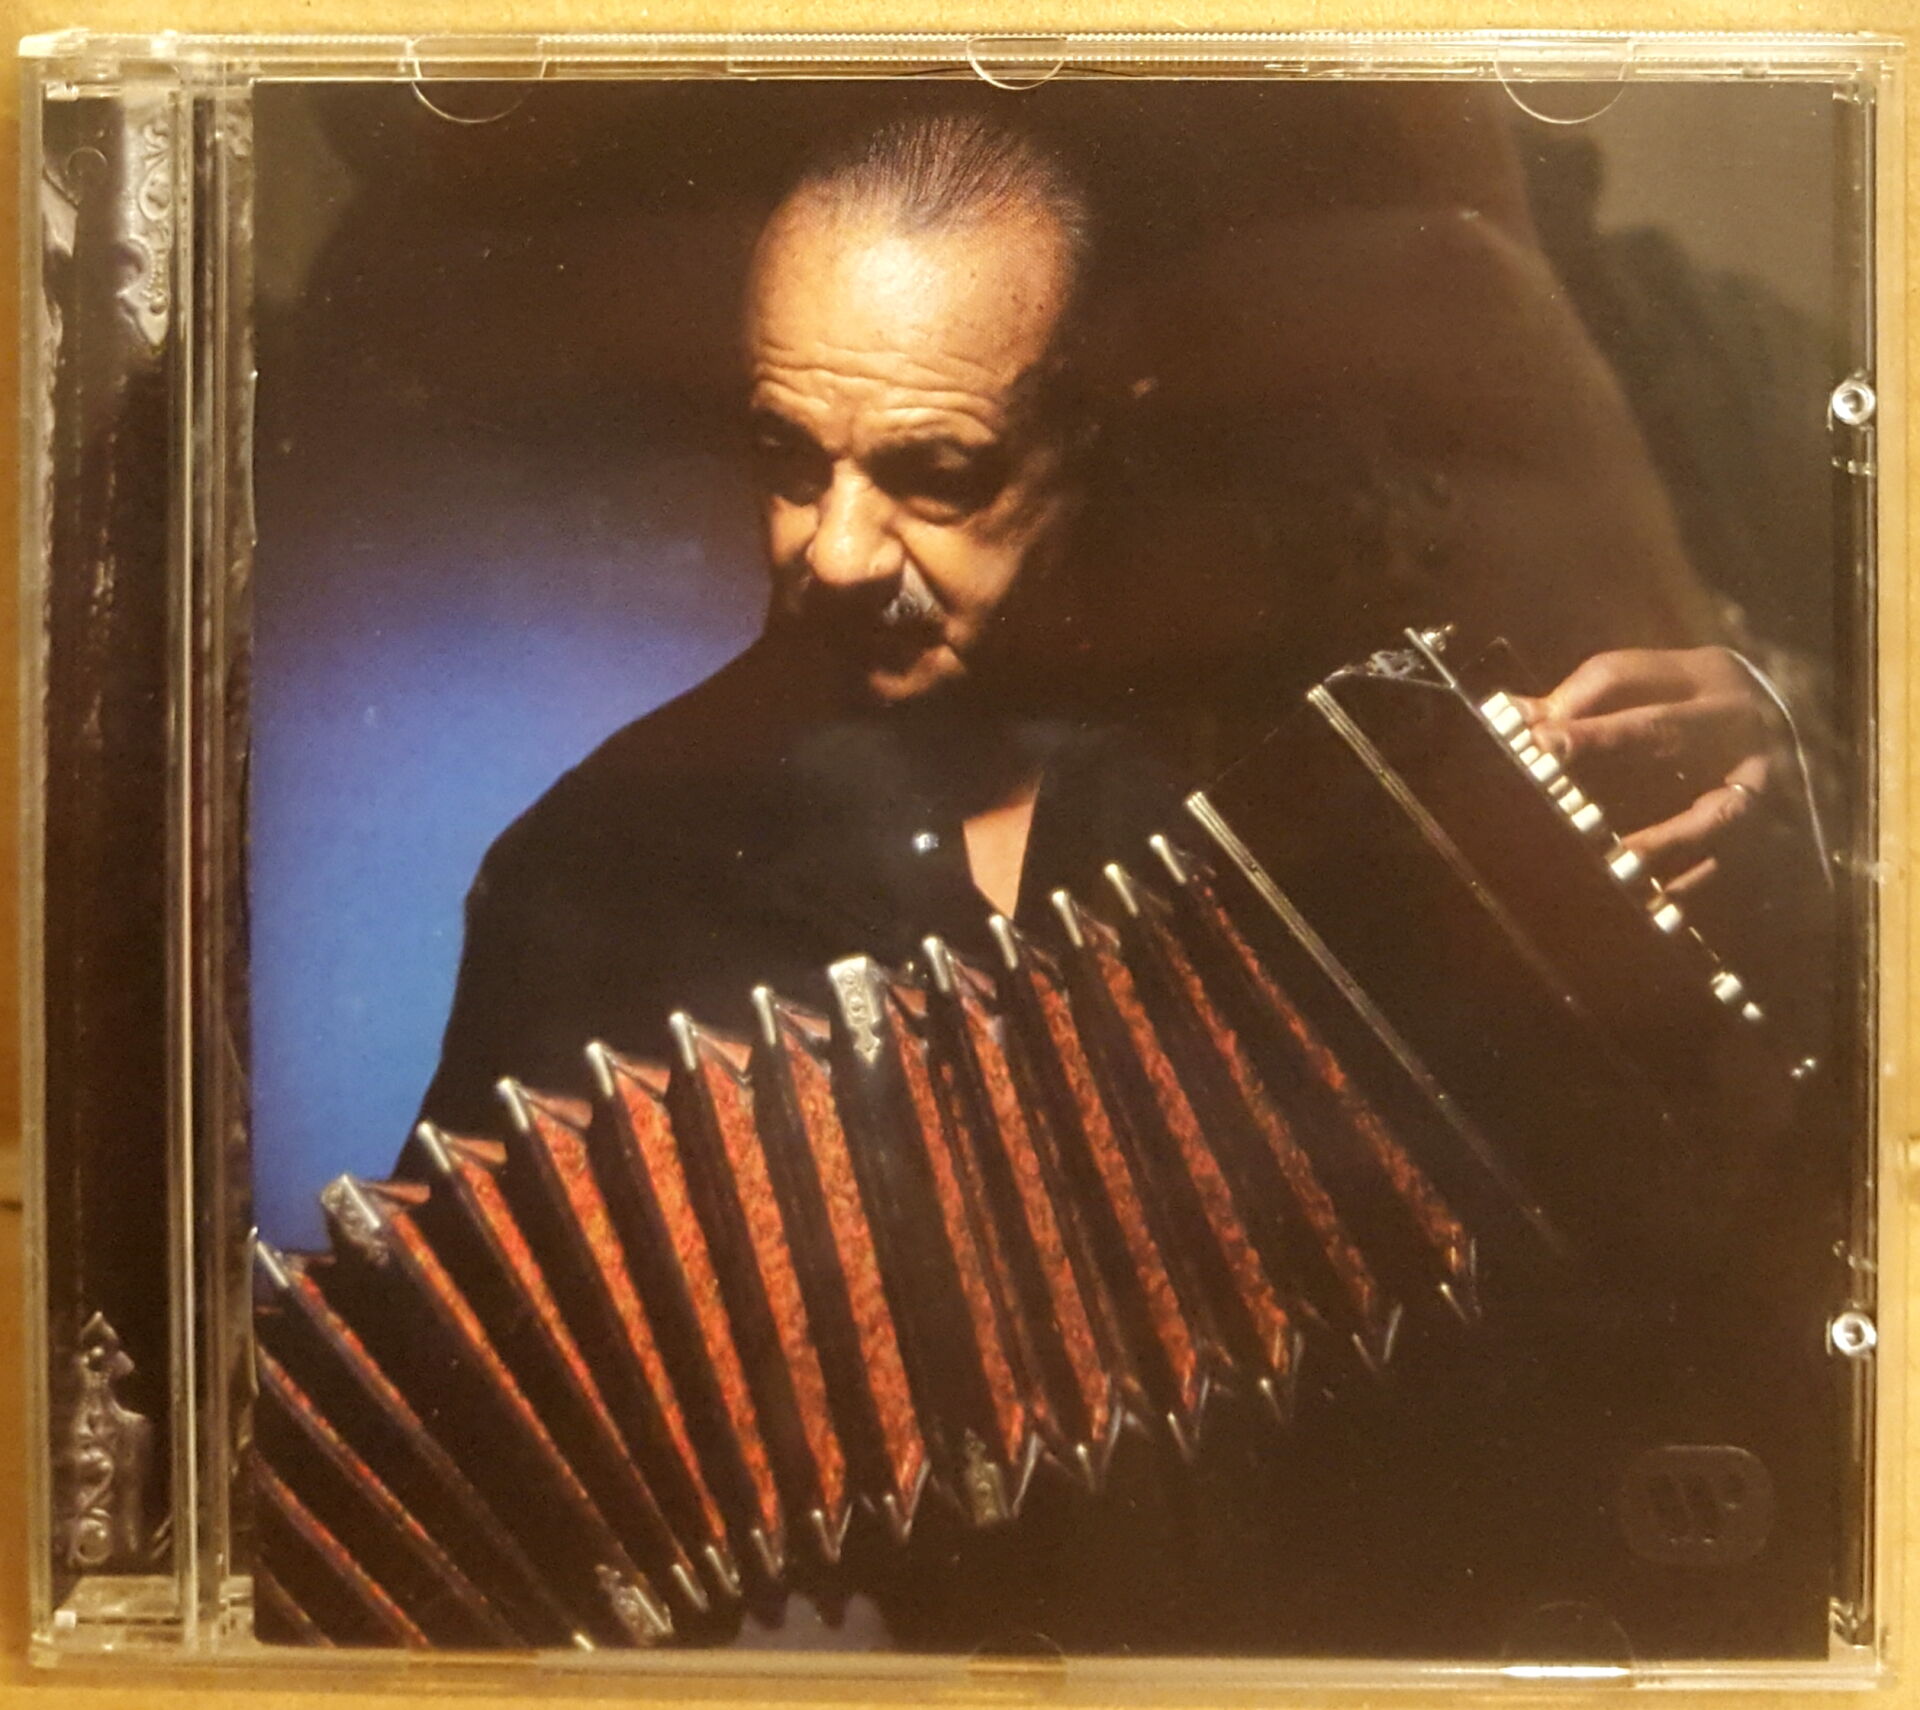 ASTOR PIAZZOLLA - TANGO ZERO HOUR (1986) - CD 1998 NONESUCH EDITION MADE IN GERMANY 2.EL